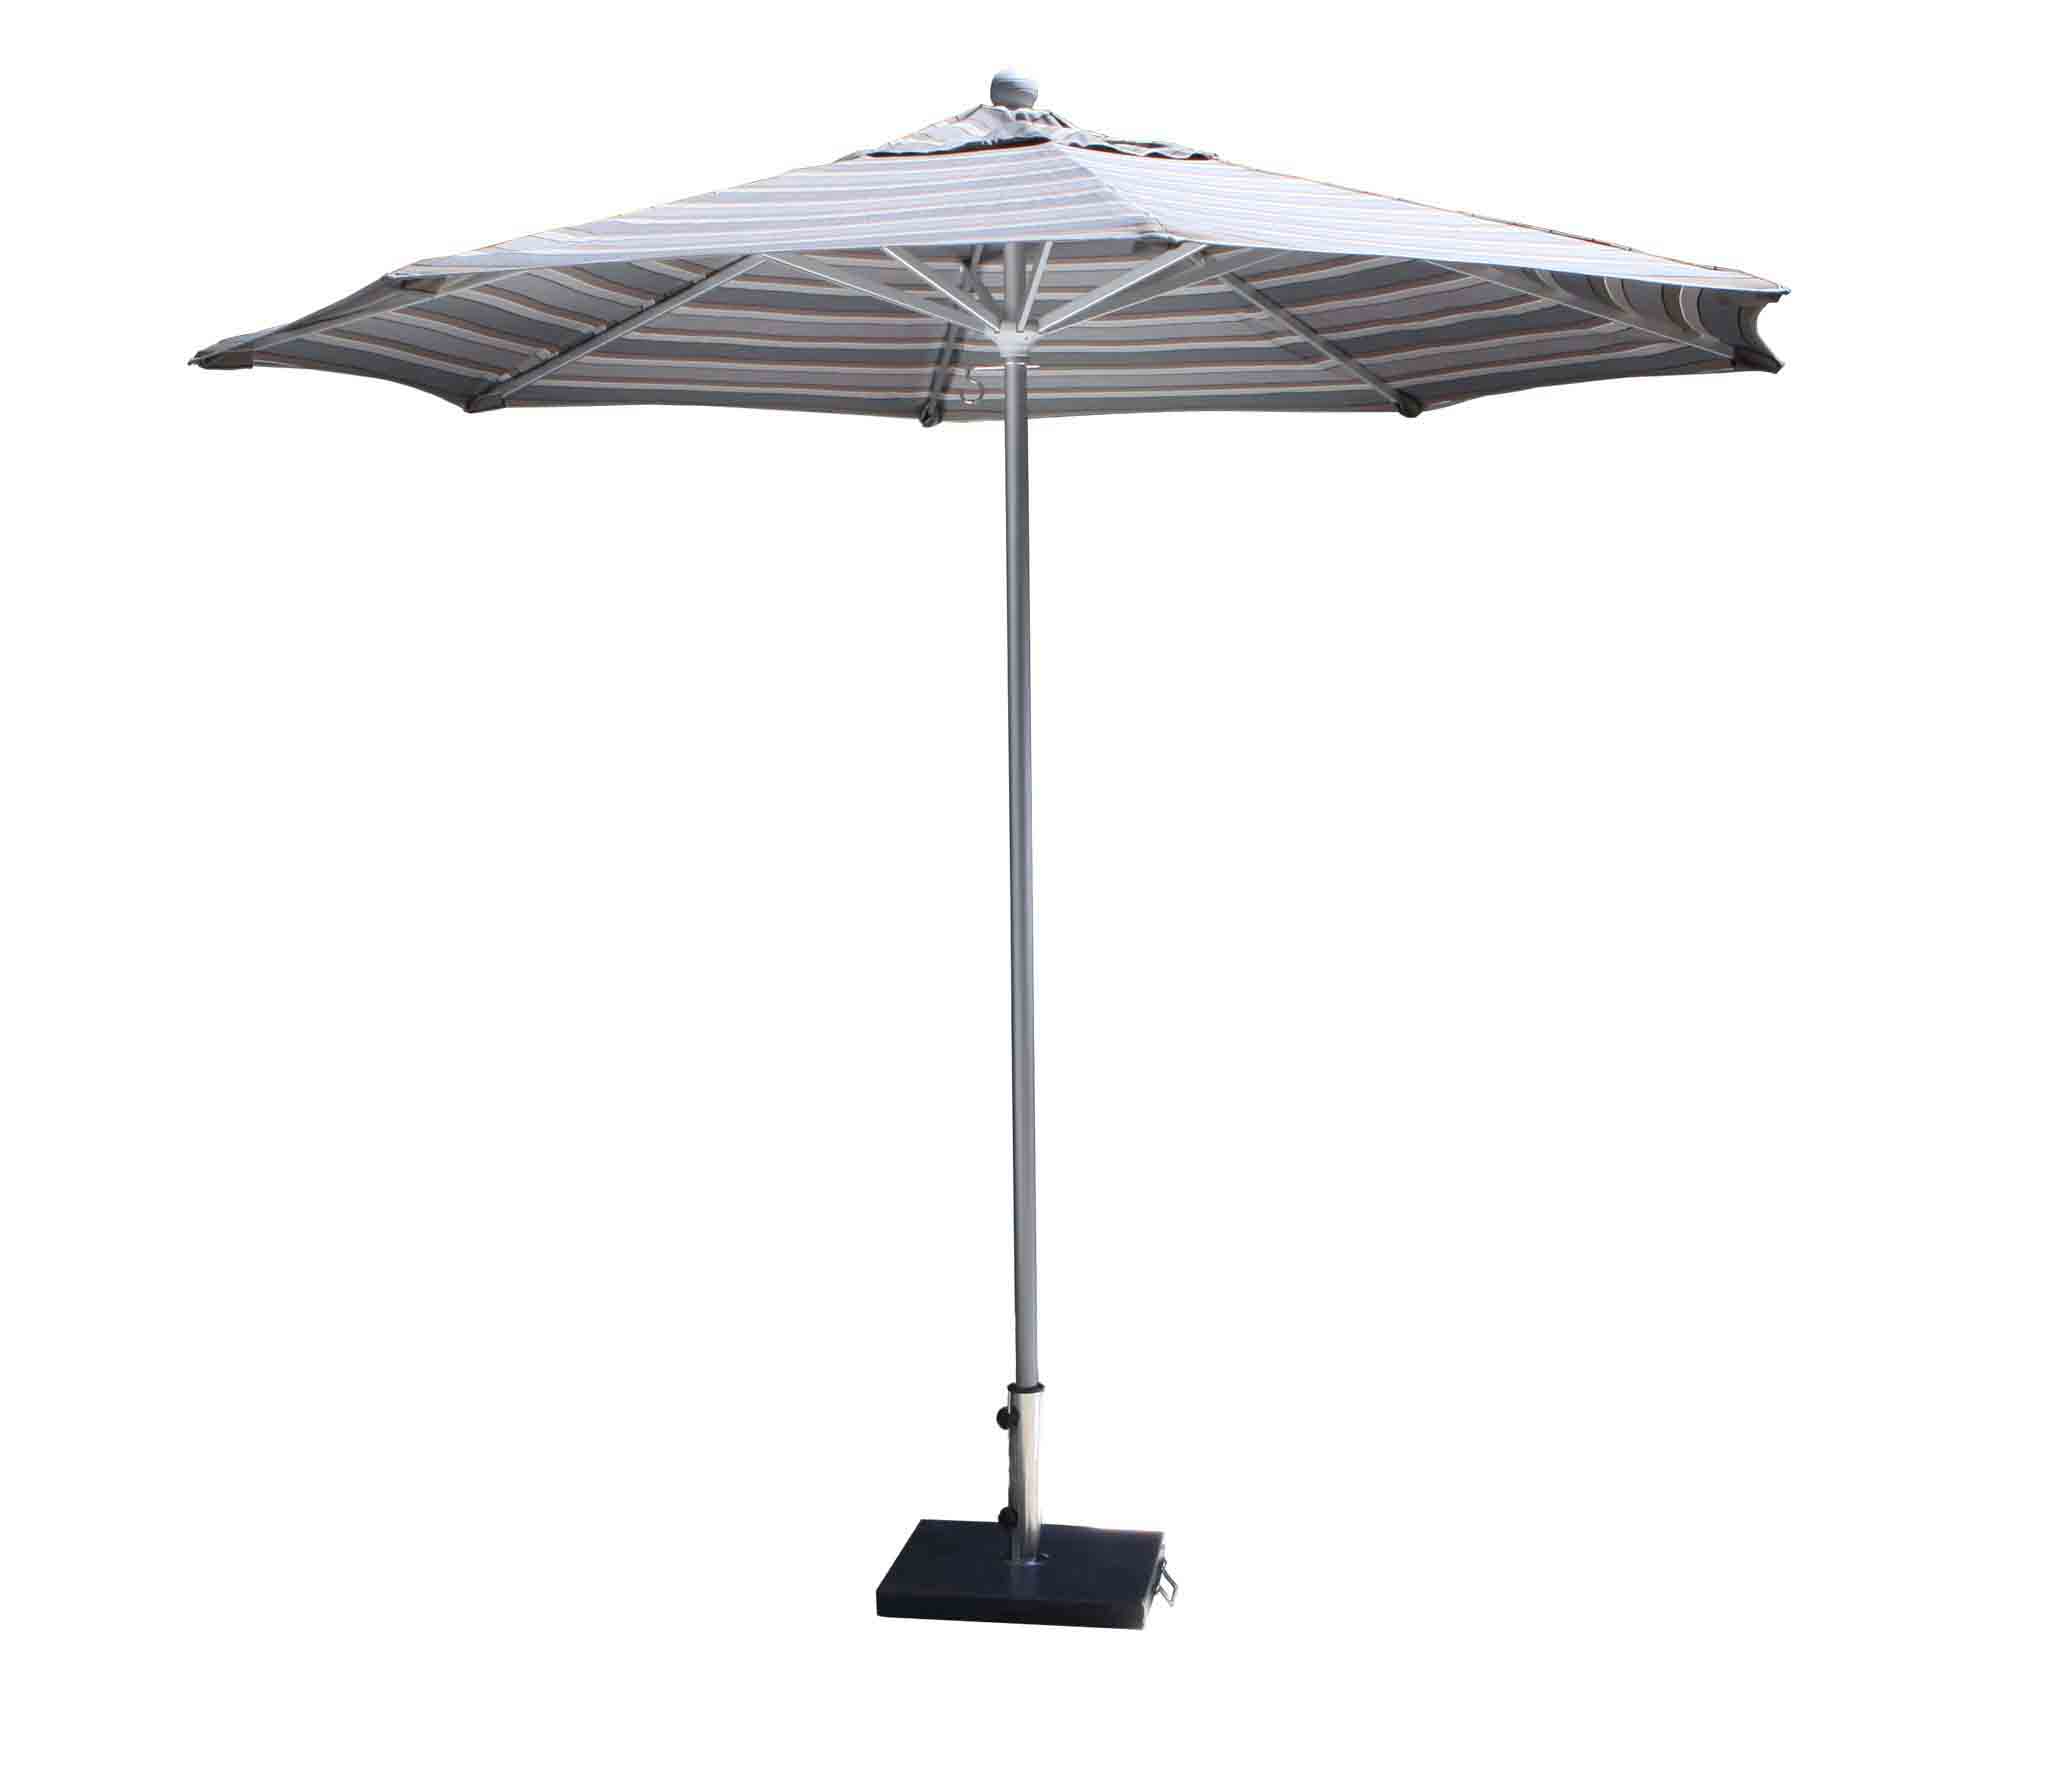 Commercial Patio Umbrella : 9ft. Commercial